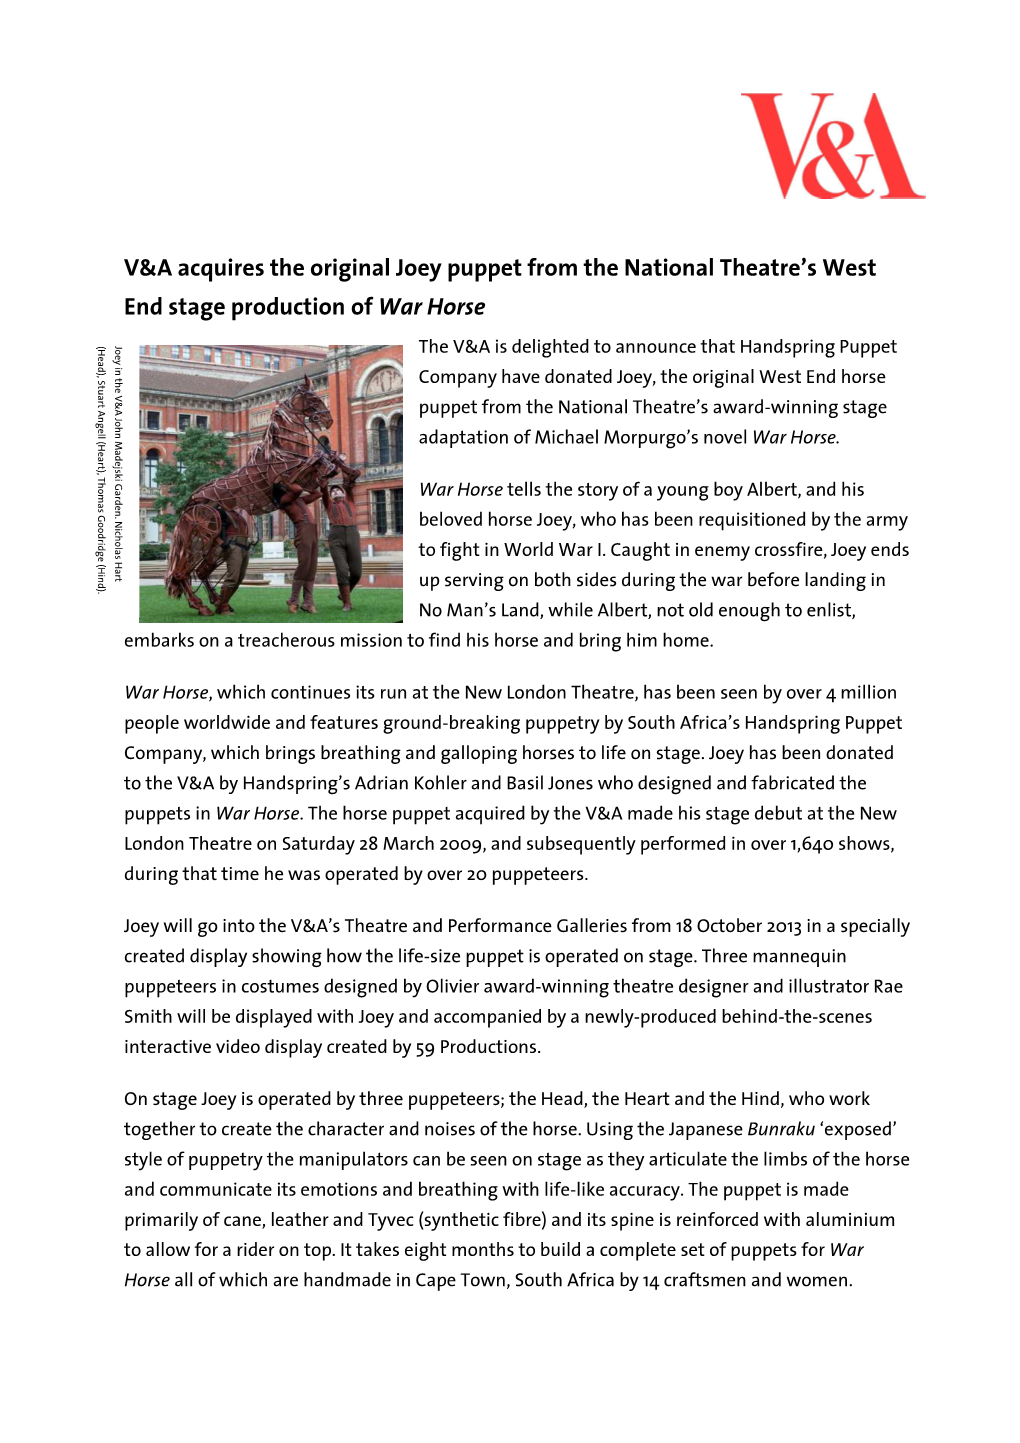 War Horse Joey Puppet Acquisition Press Release